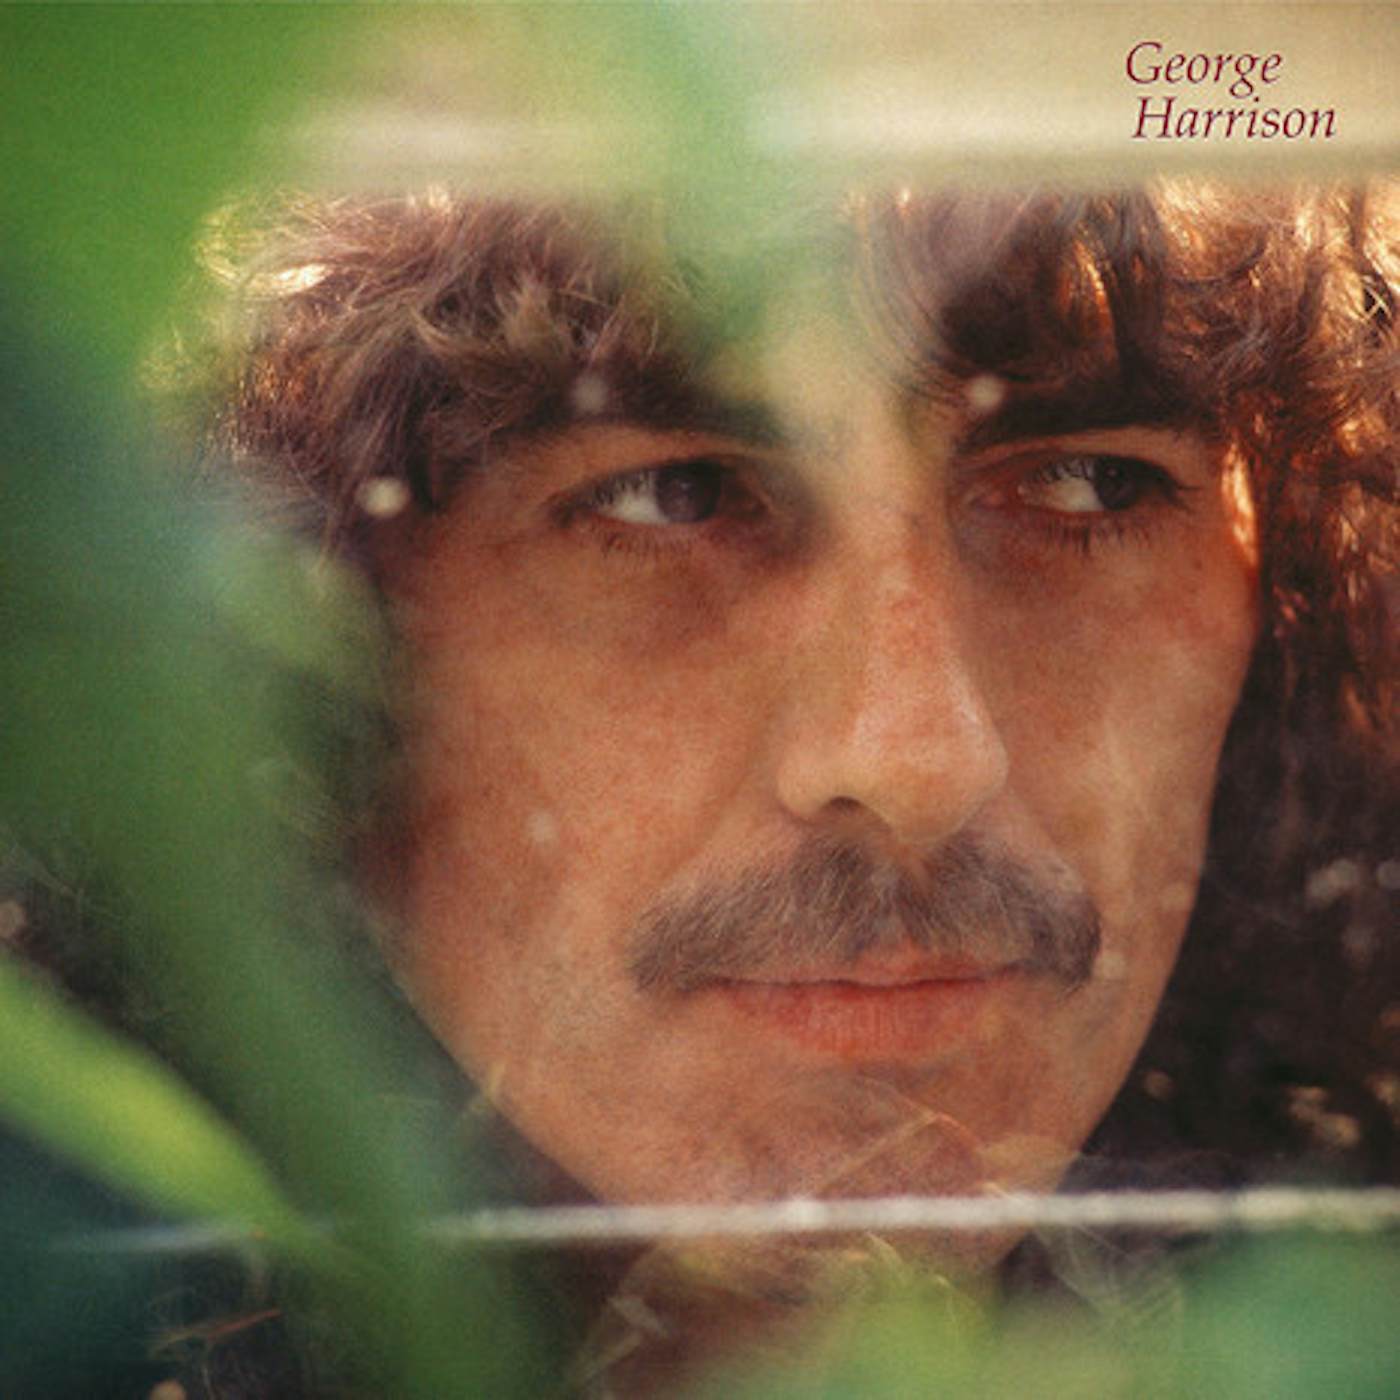 George Harrison Vinyl Record